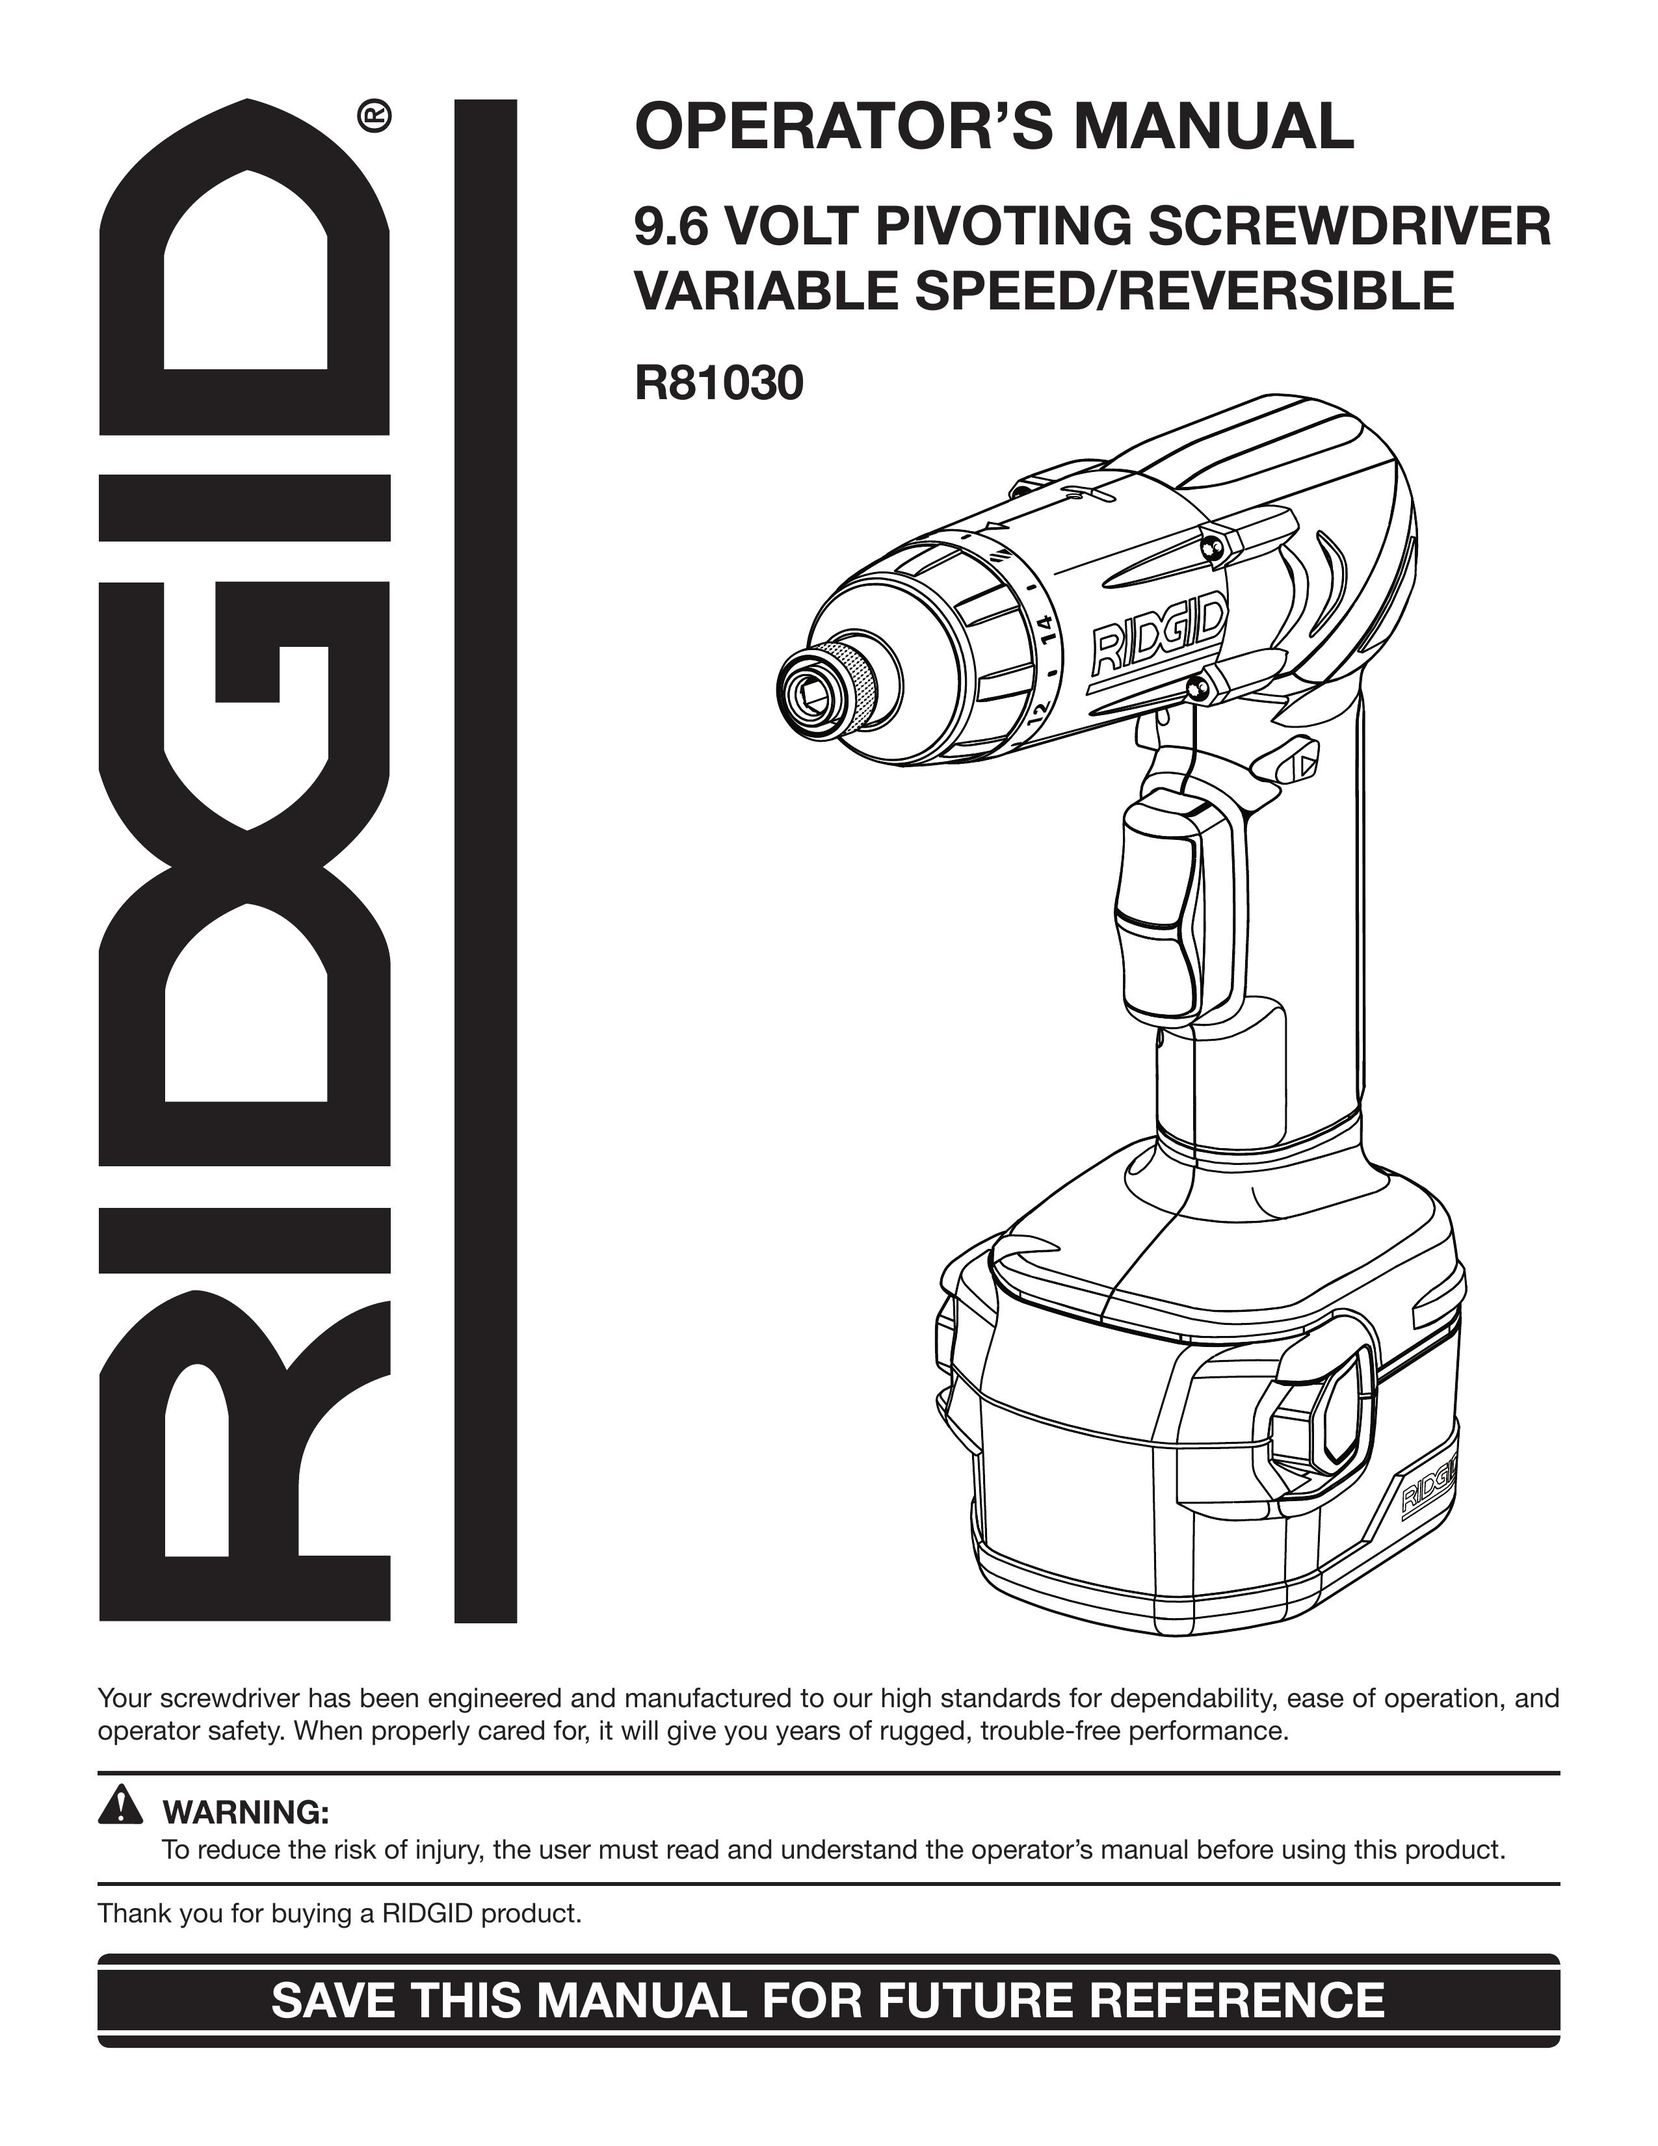 RIDGID R81030 Power Screwdriver User Manual